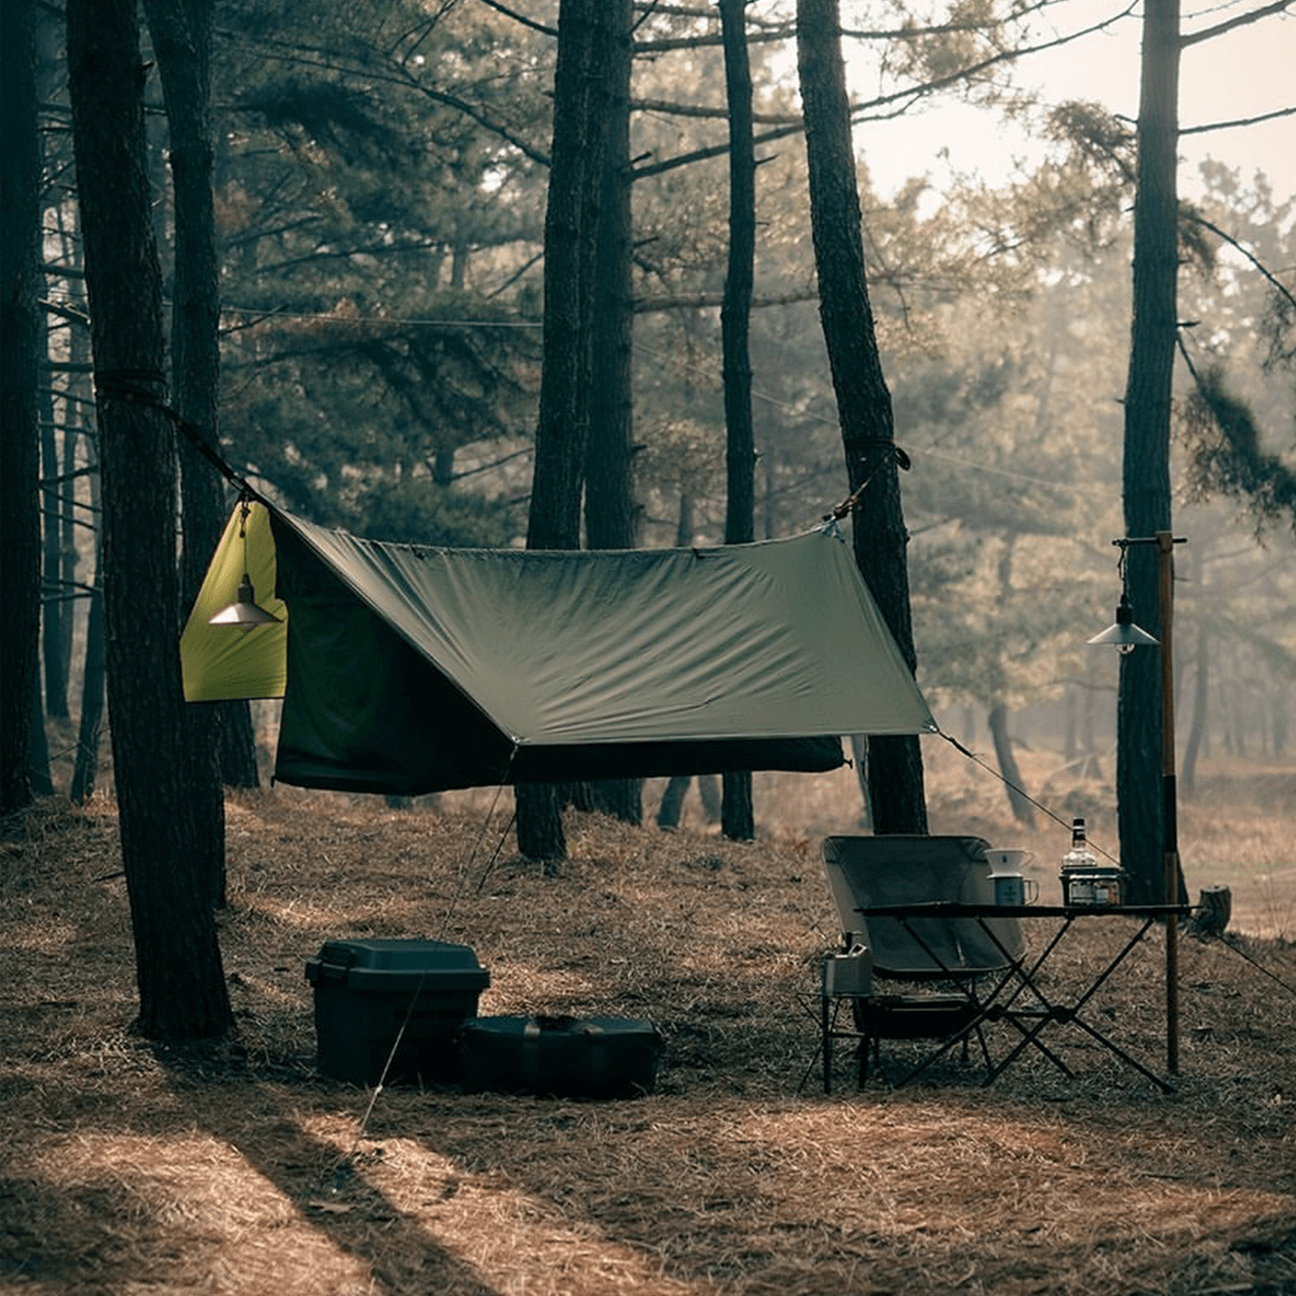 Haven Tents